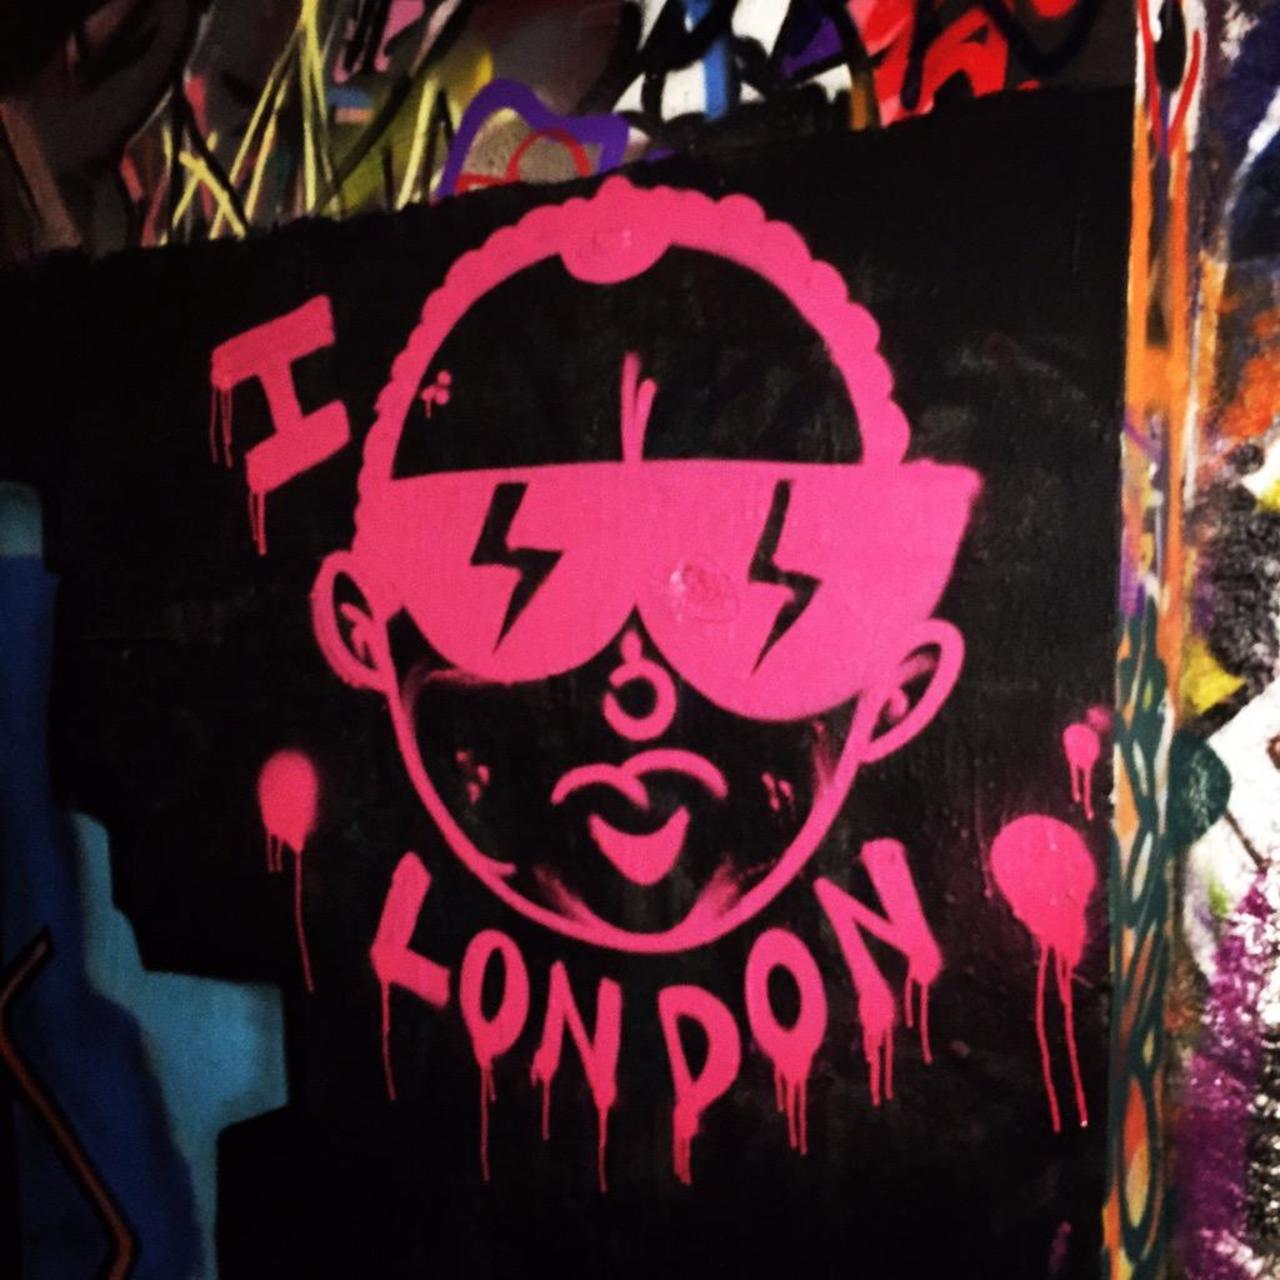 I  London #streetart #urbanart #London #art #graffiti #graffitiart http://t.co/oI7uiZkQH1